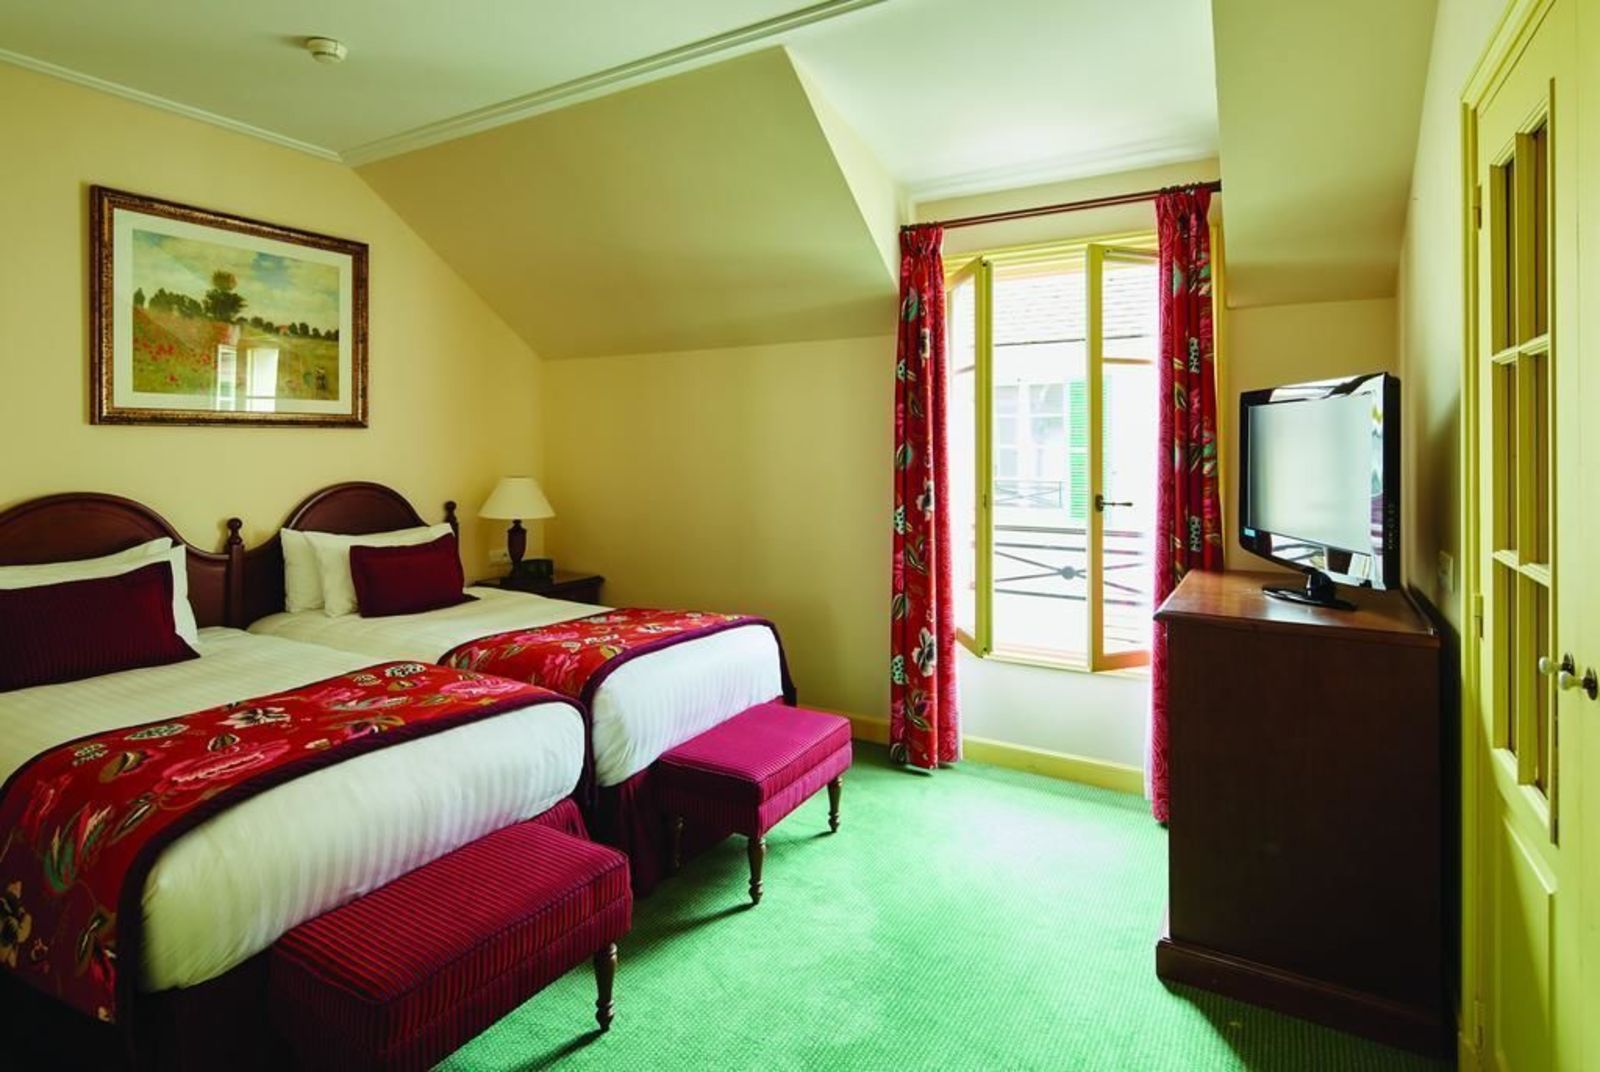 Marriott's Village d'ile-de-France, 2-Bedroom